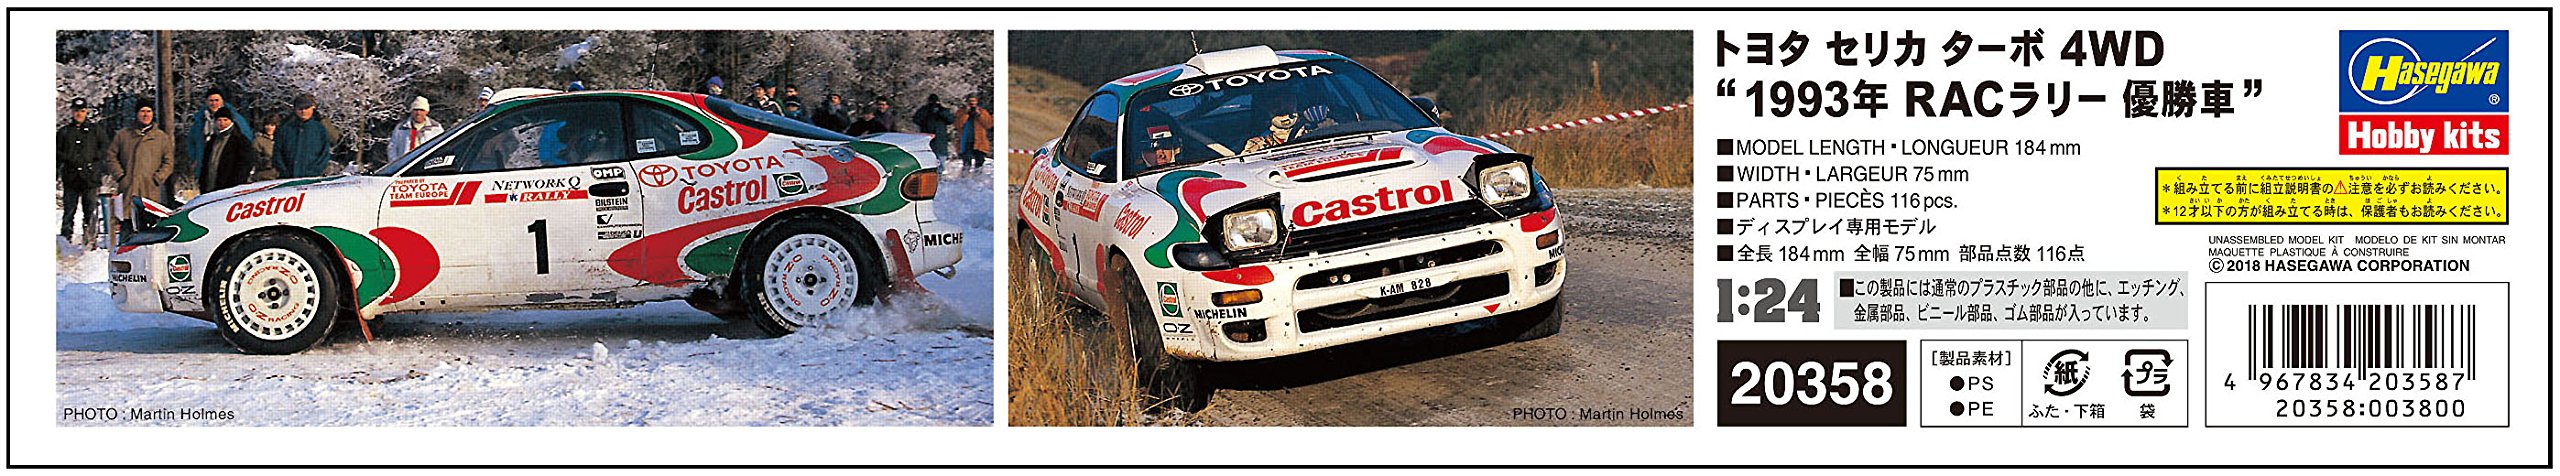 HASEGAWA 20358 Toyota Celica Turbo 4Wd '1993 Rac Rally Winner' Kit à l'échelle 1/24